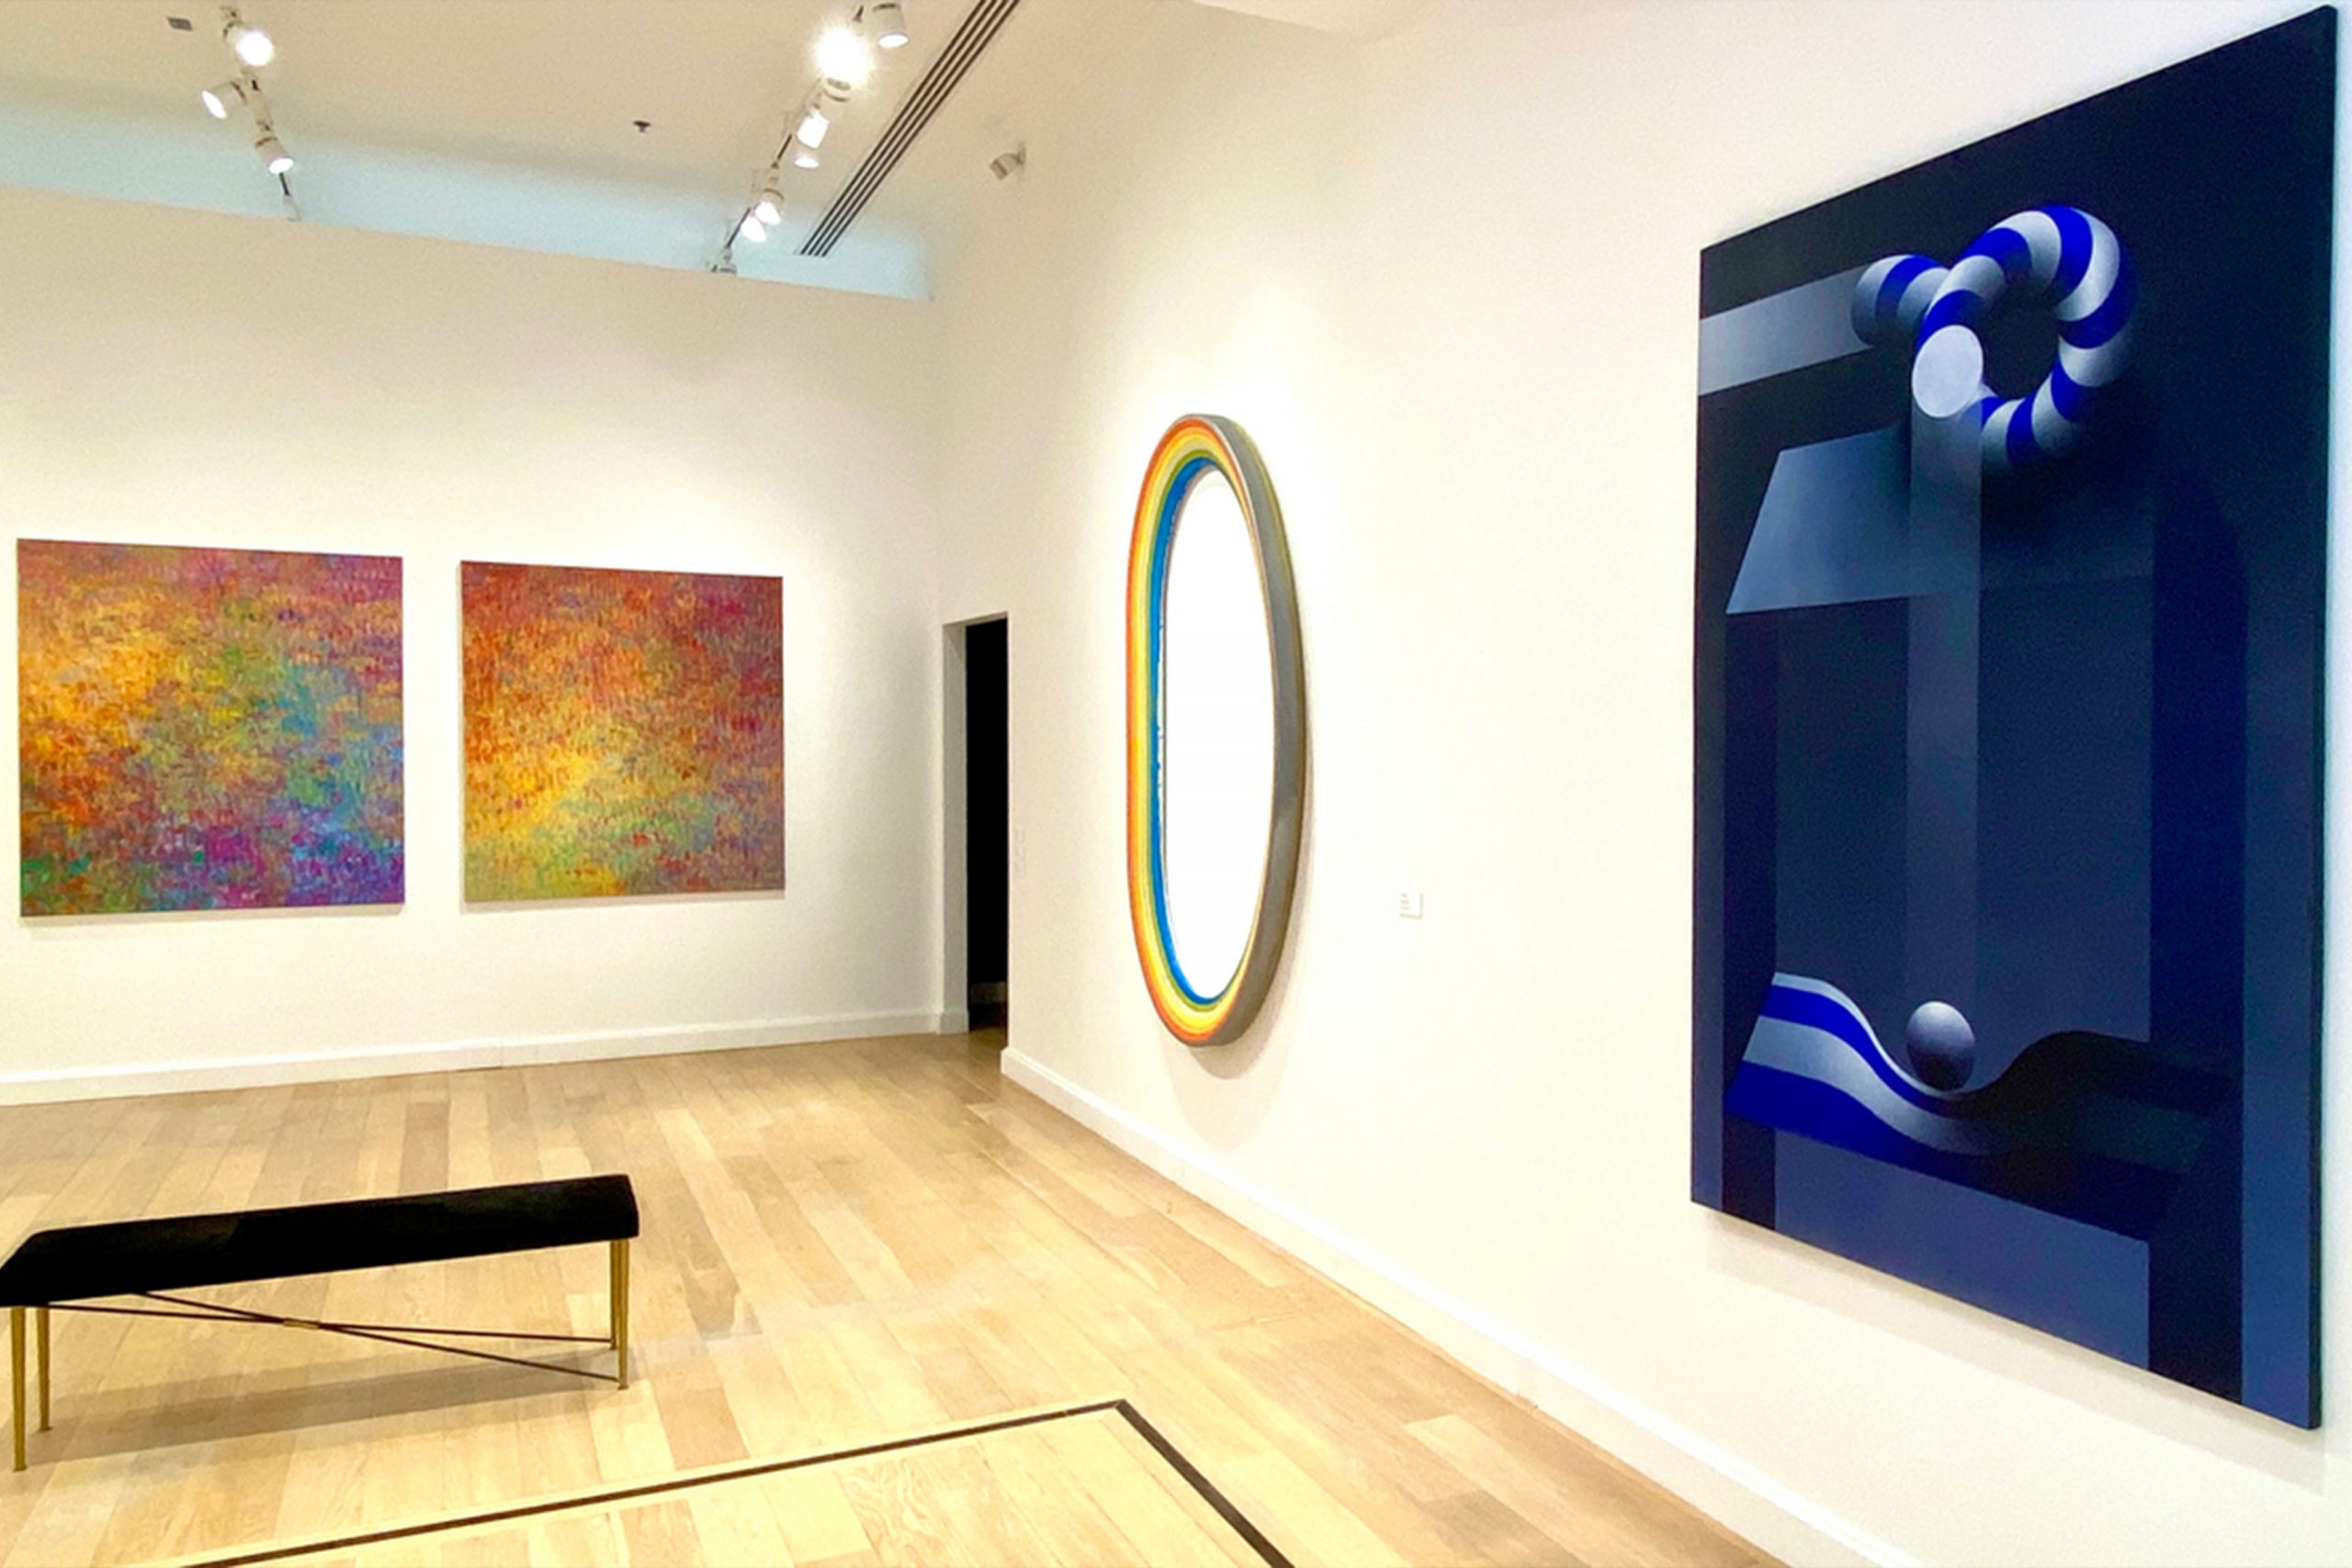 Elemental Perception at Galloire’s Dubai Gallery